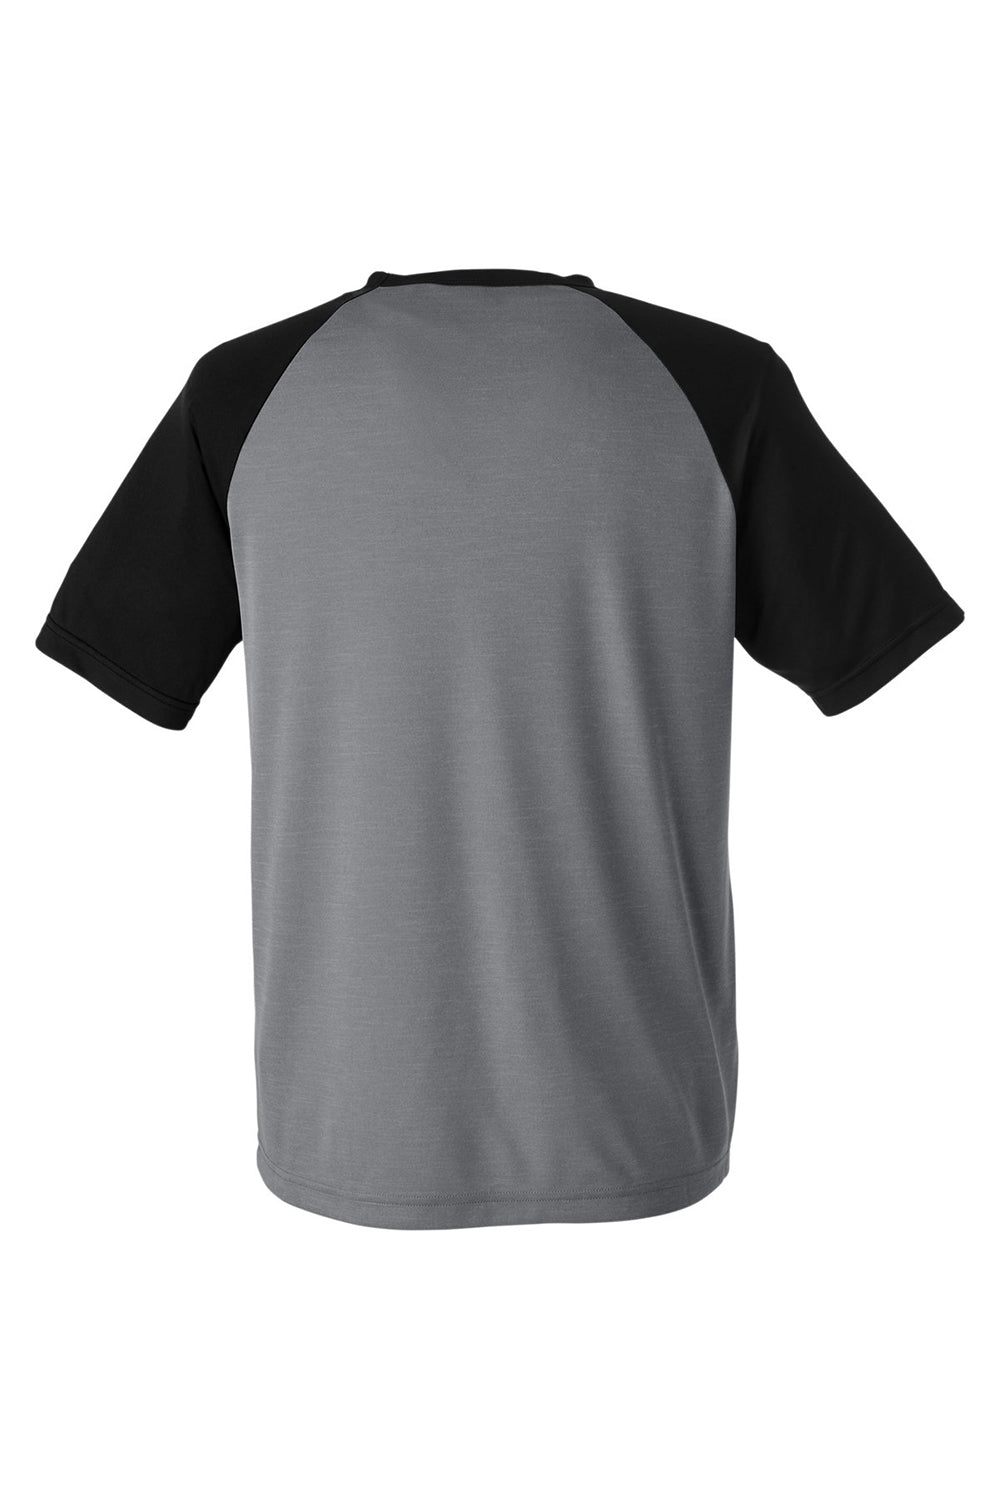 Team 365 TT62 Mens Zone Colorblock Moisture Wicking Short Sleeve Crewneck T-Shirt Heather Dark Grey/Black Flat Back